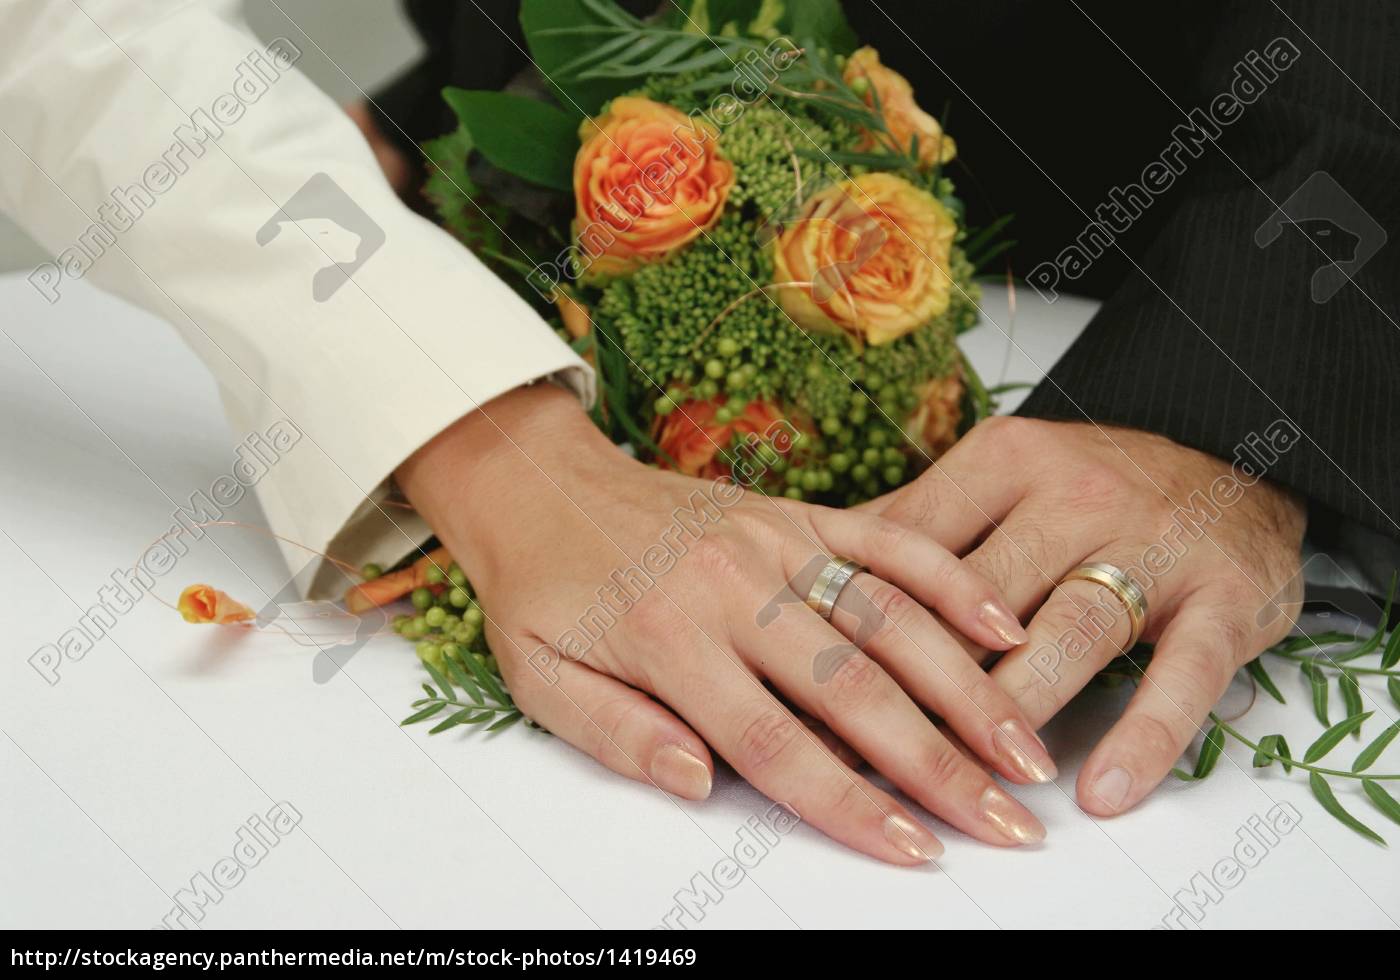 Hochzeit Ehe Hande Ringe Eheringe Lizenzfreies Bild Bildagentur Panthermedia